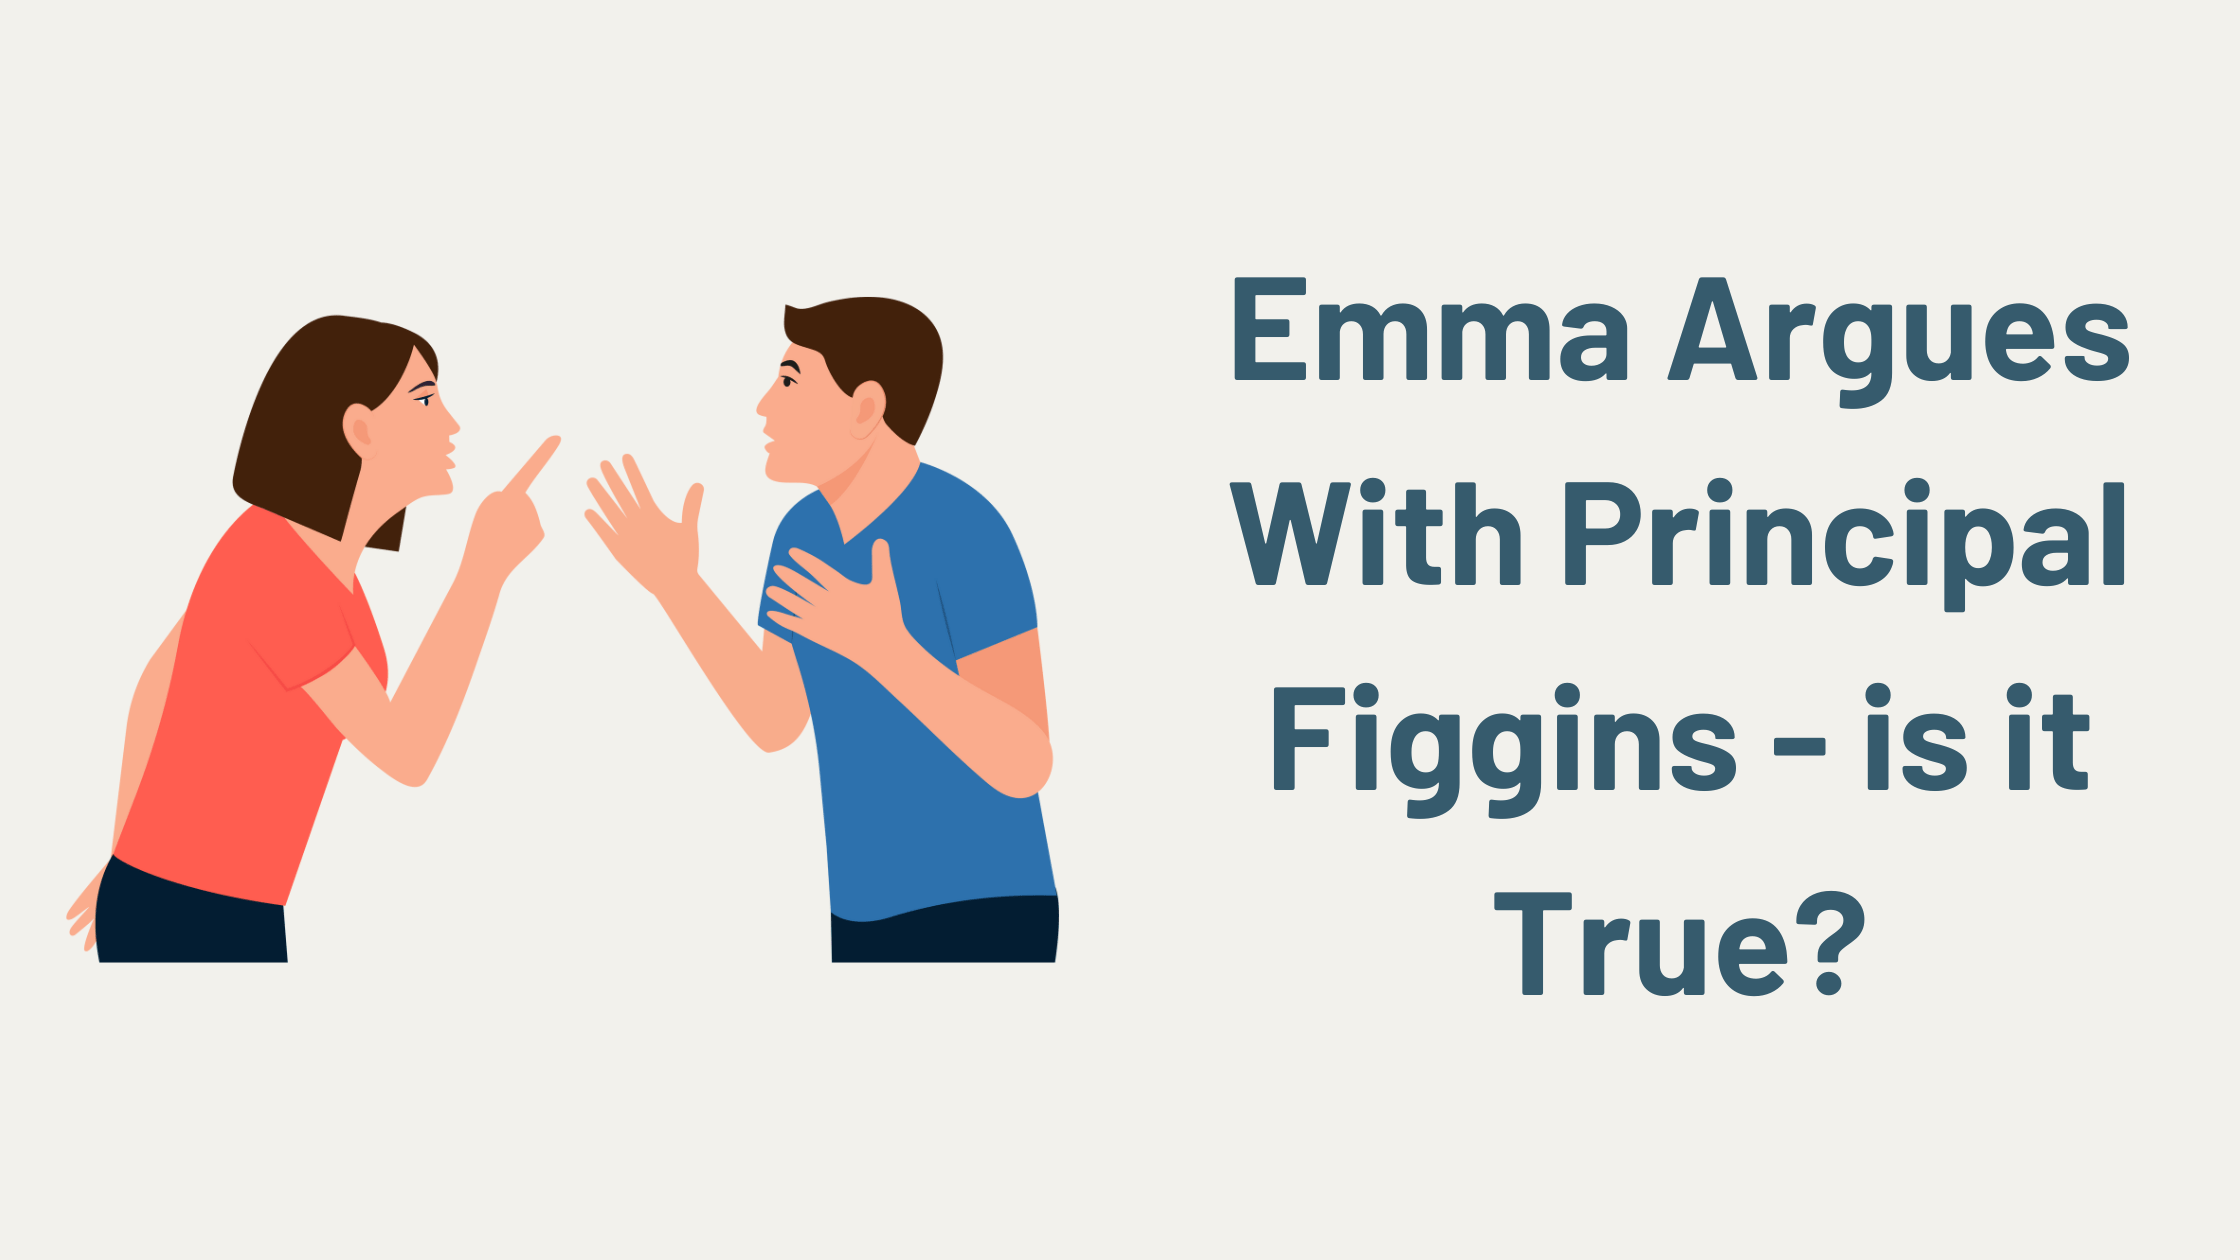 Emma Argues With Principal Figgins - is it True? - FollowMyStep